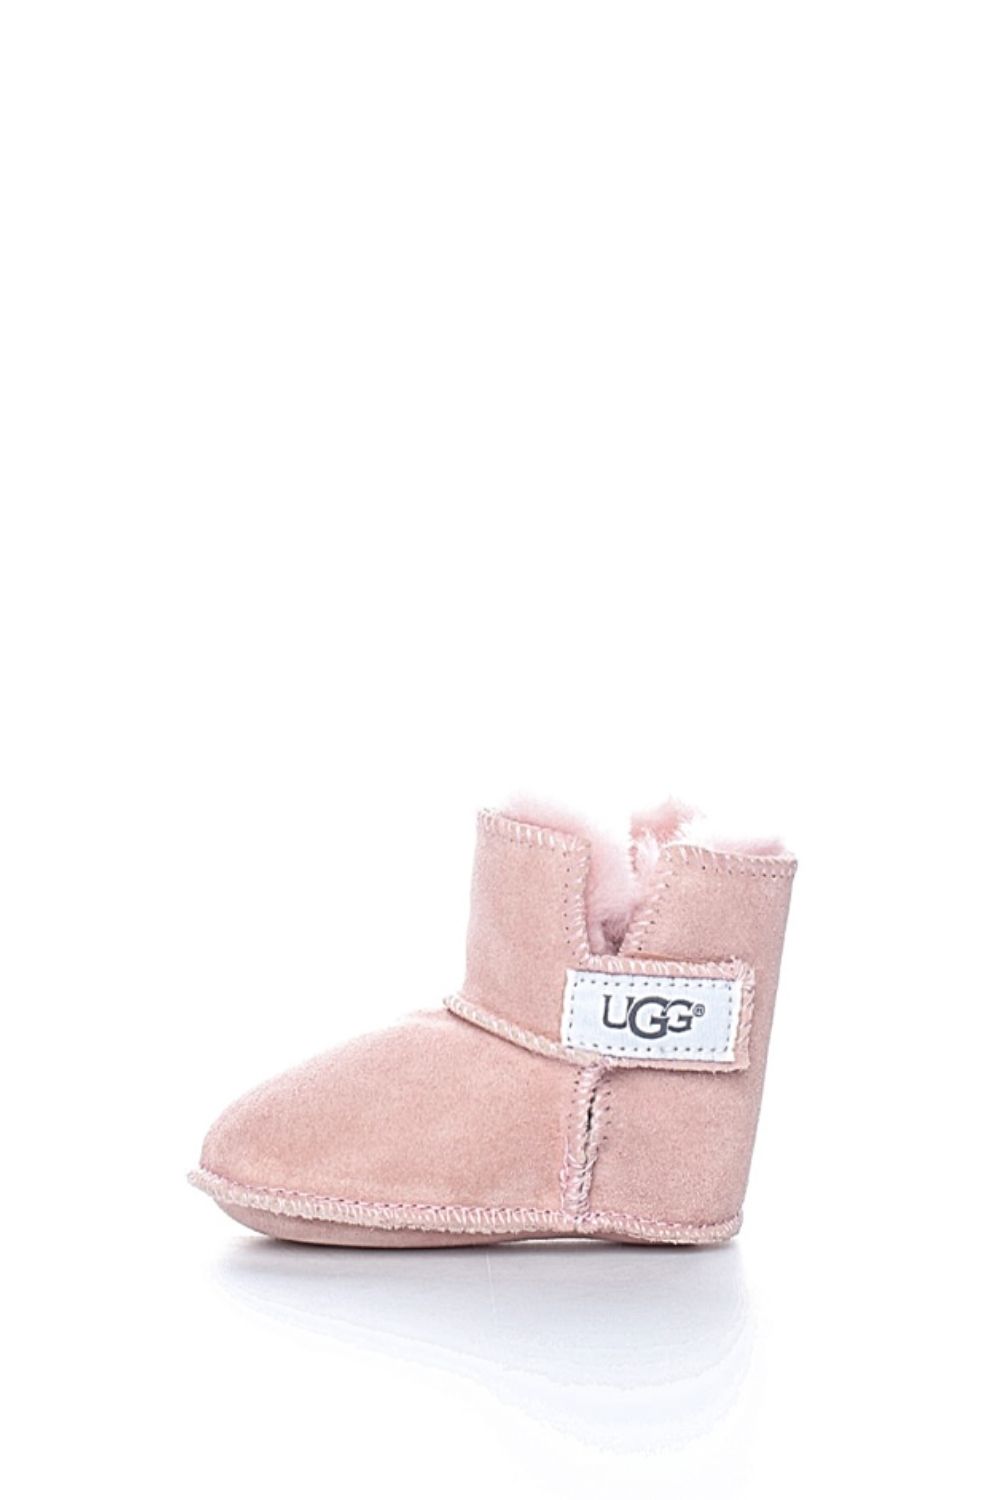 UGG - Βρεφικά μποτάκια Ugg Erin ροζ Παιδικά/Baby/Παπούτσια/Μπότες-Μποτάκια